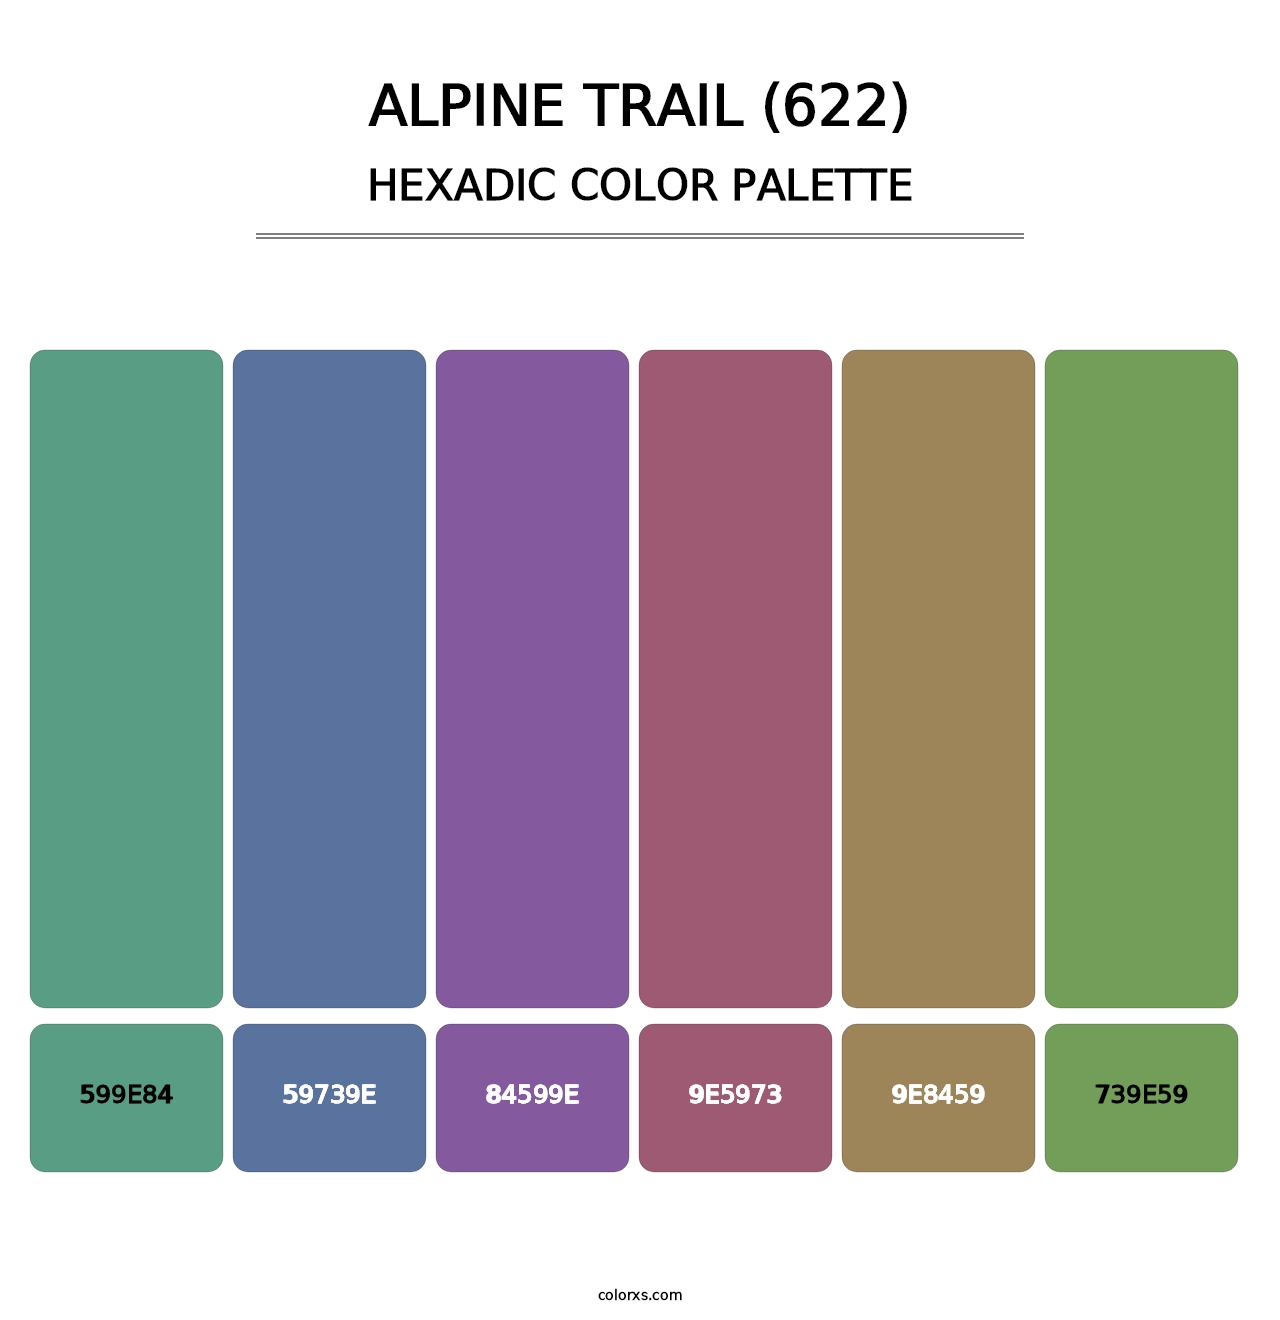 Alpine Trail (622) - Hexadic Color Palette